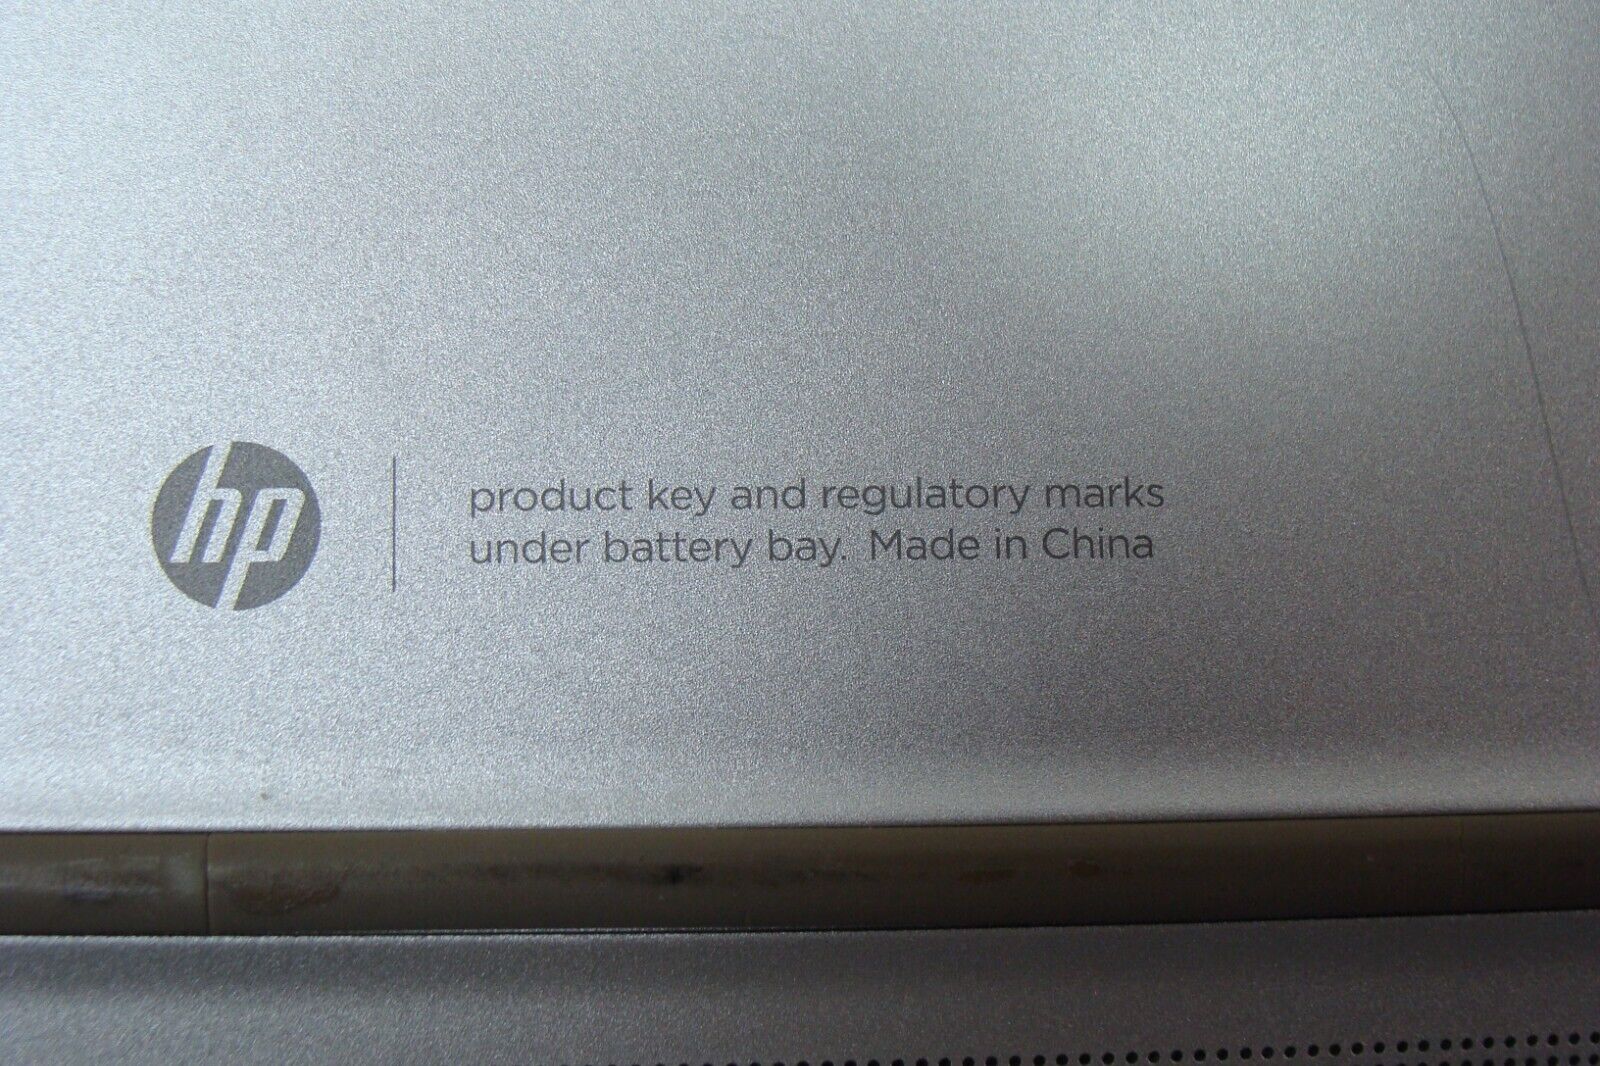 HP Envy 17.3” m7-u109dx Genuine Laptop Bottom Case AM1CR000310 813783-001